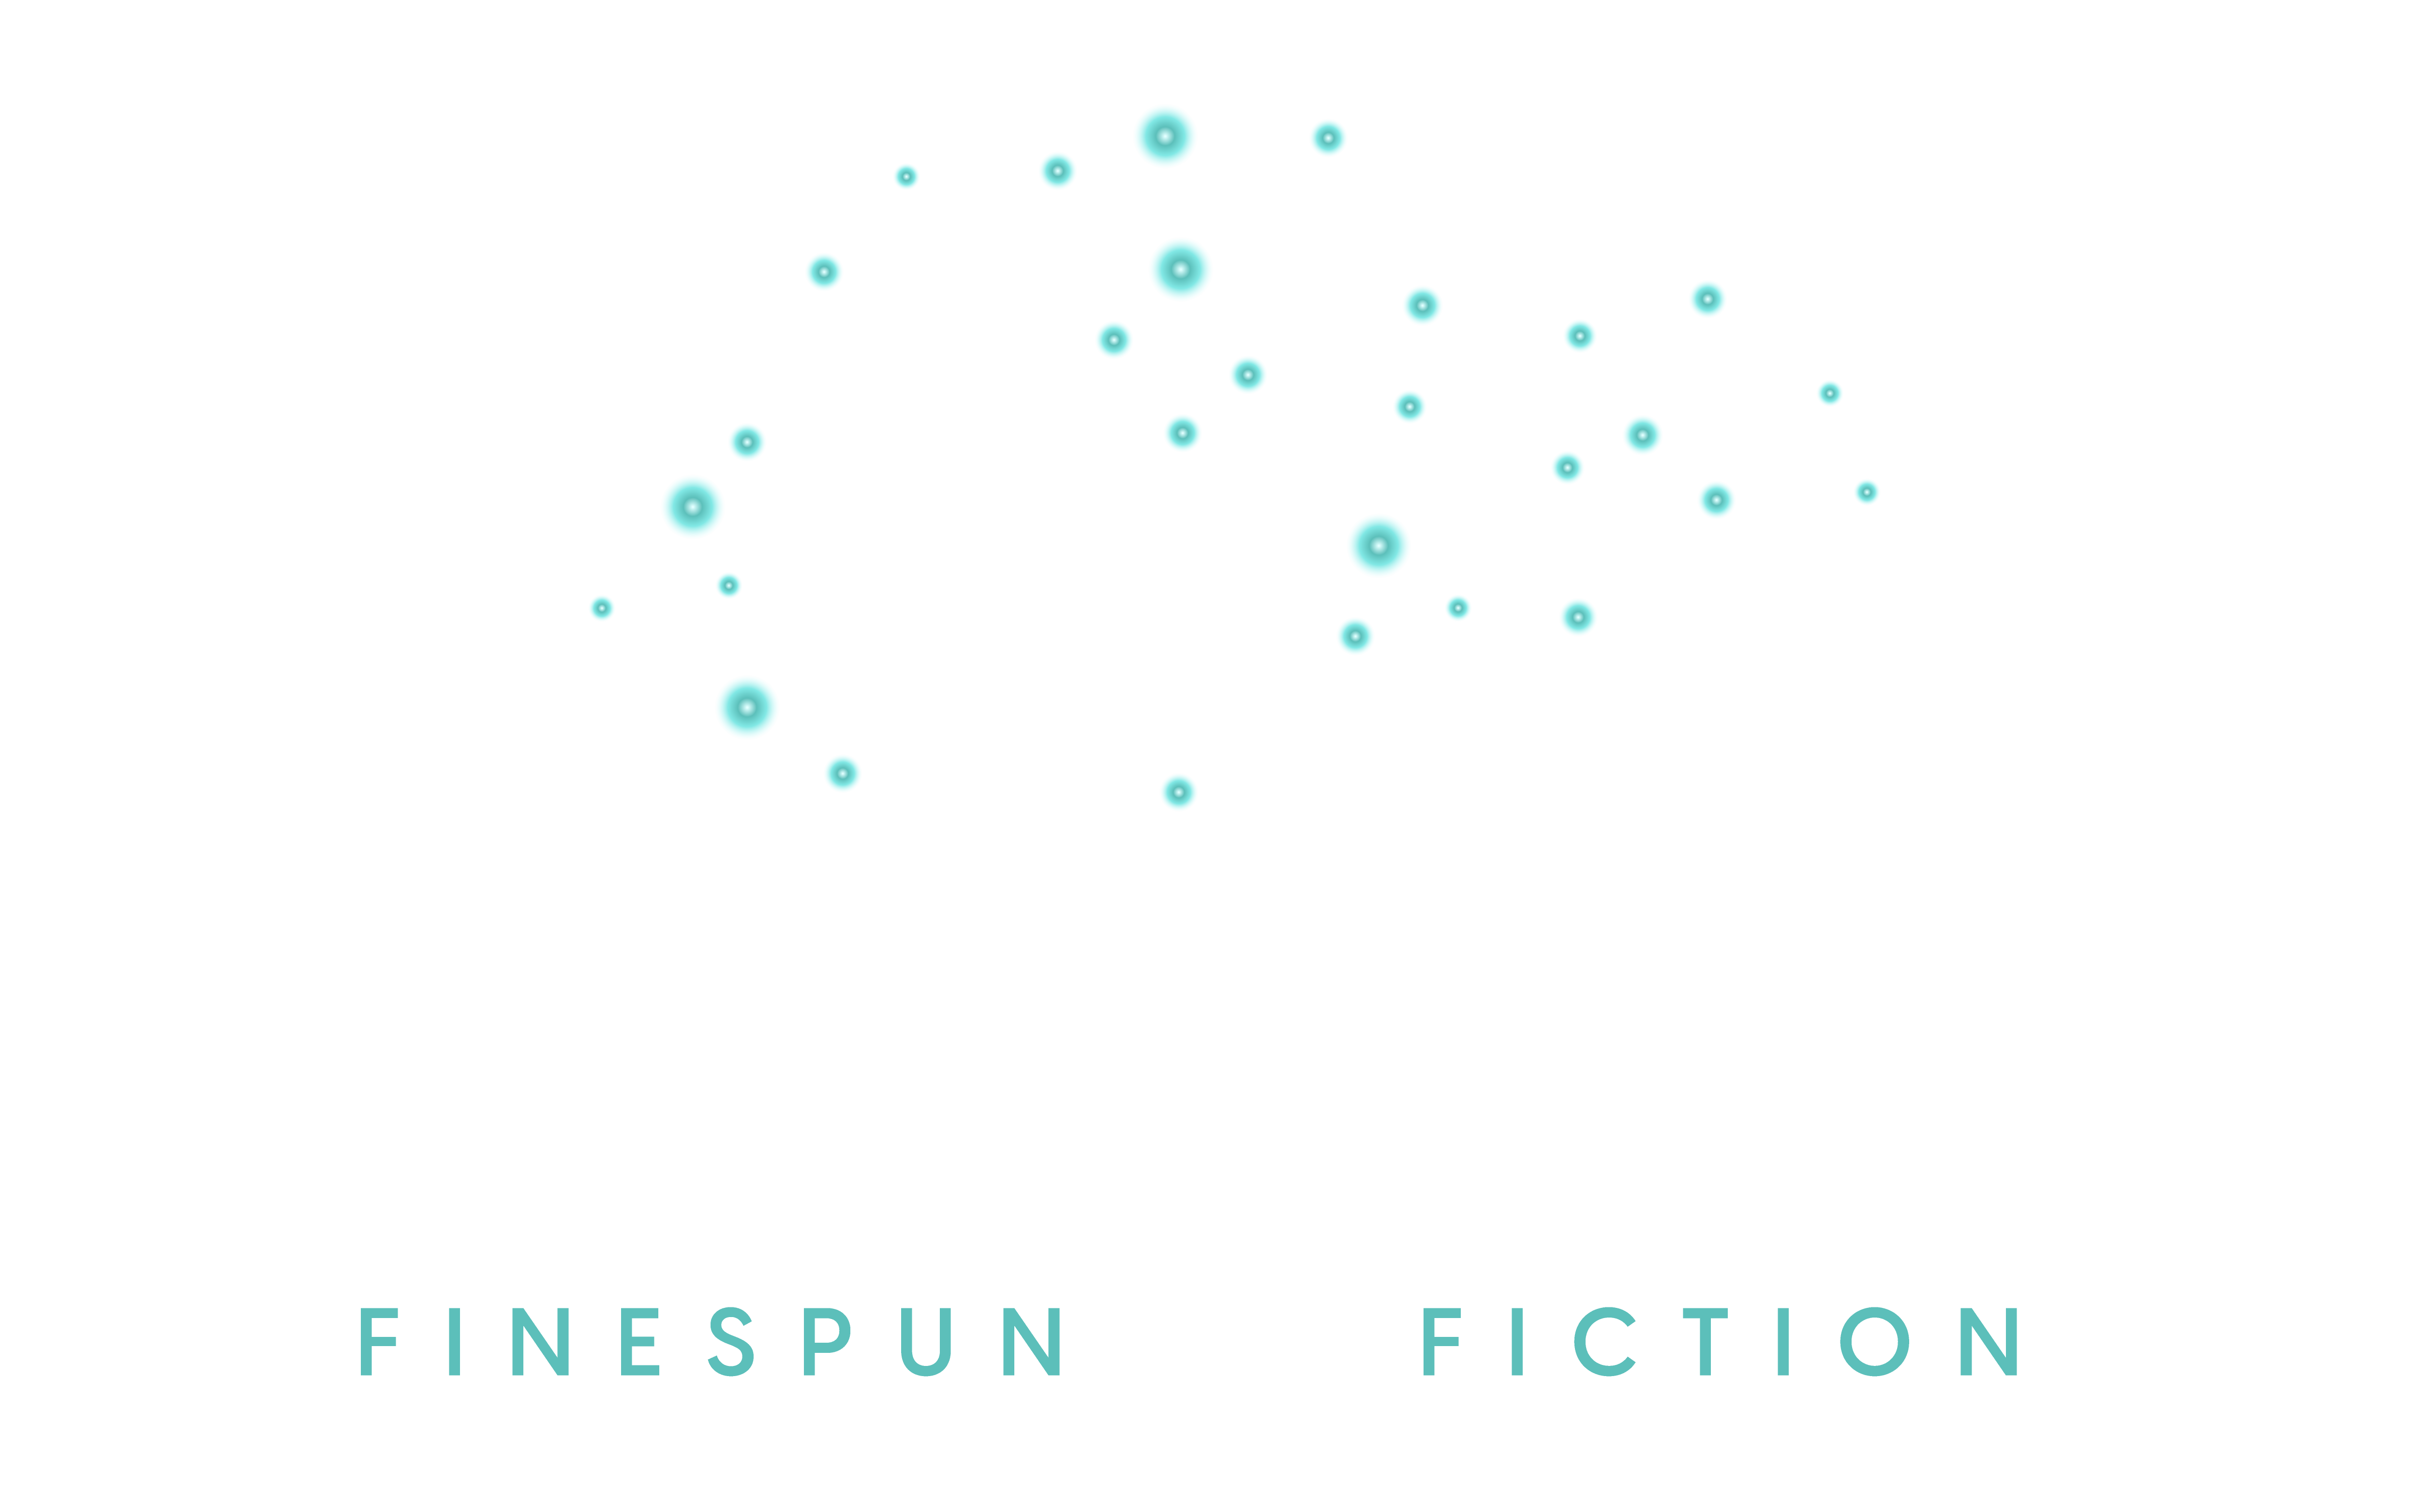 Zoe Tasia